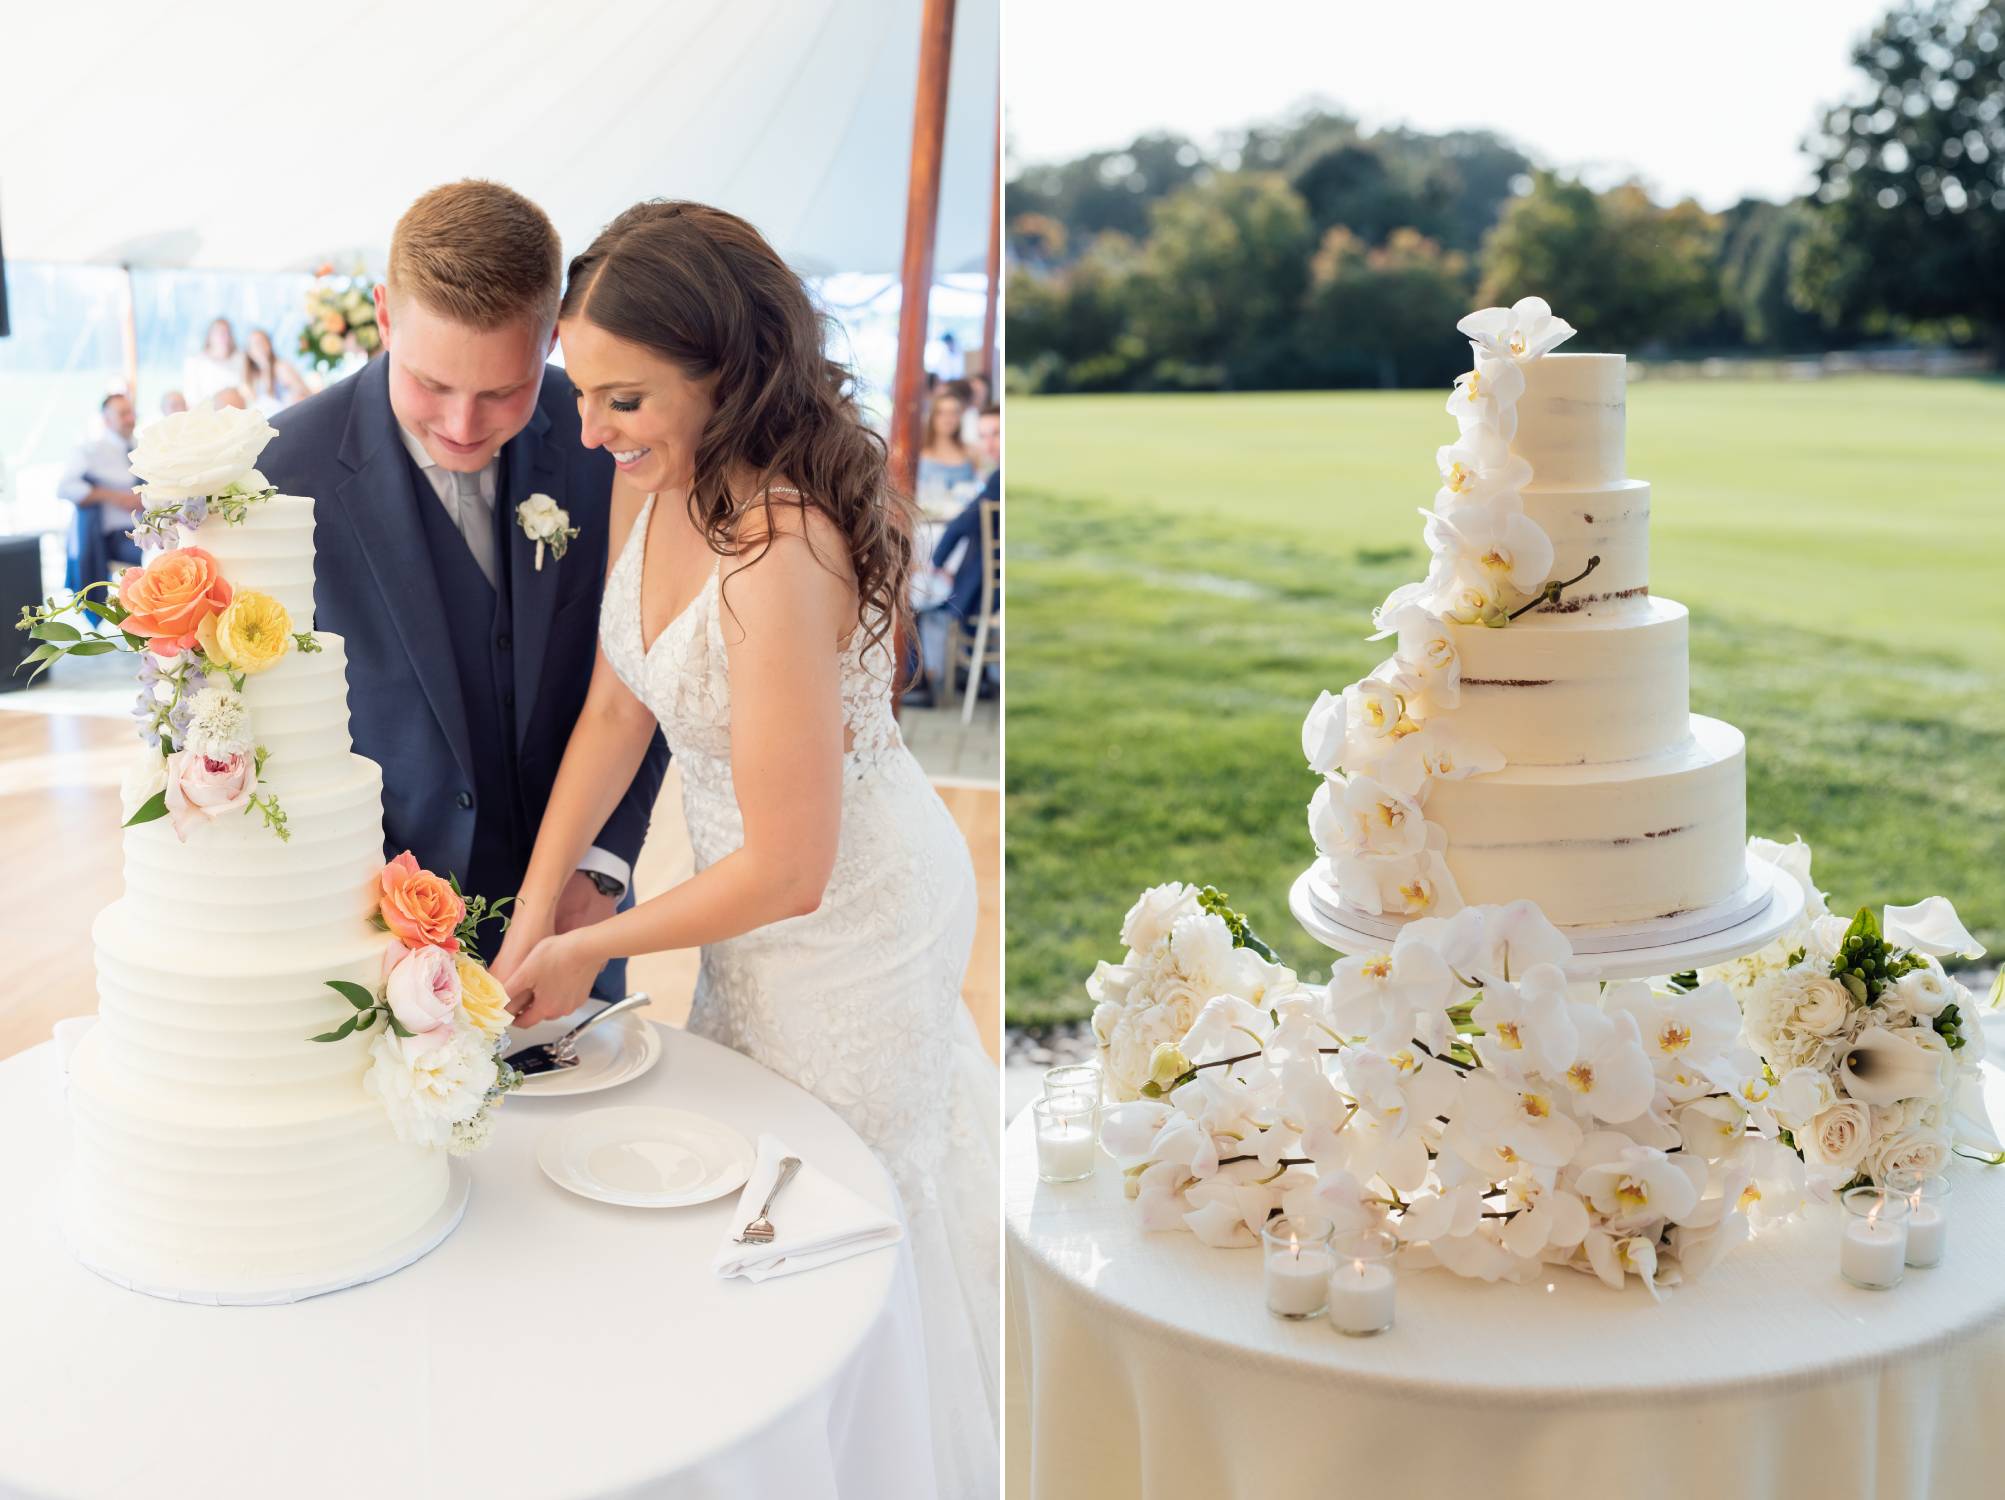 Couple cutting cake and a wedding cake